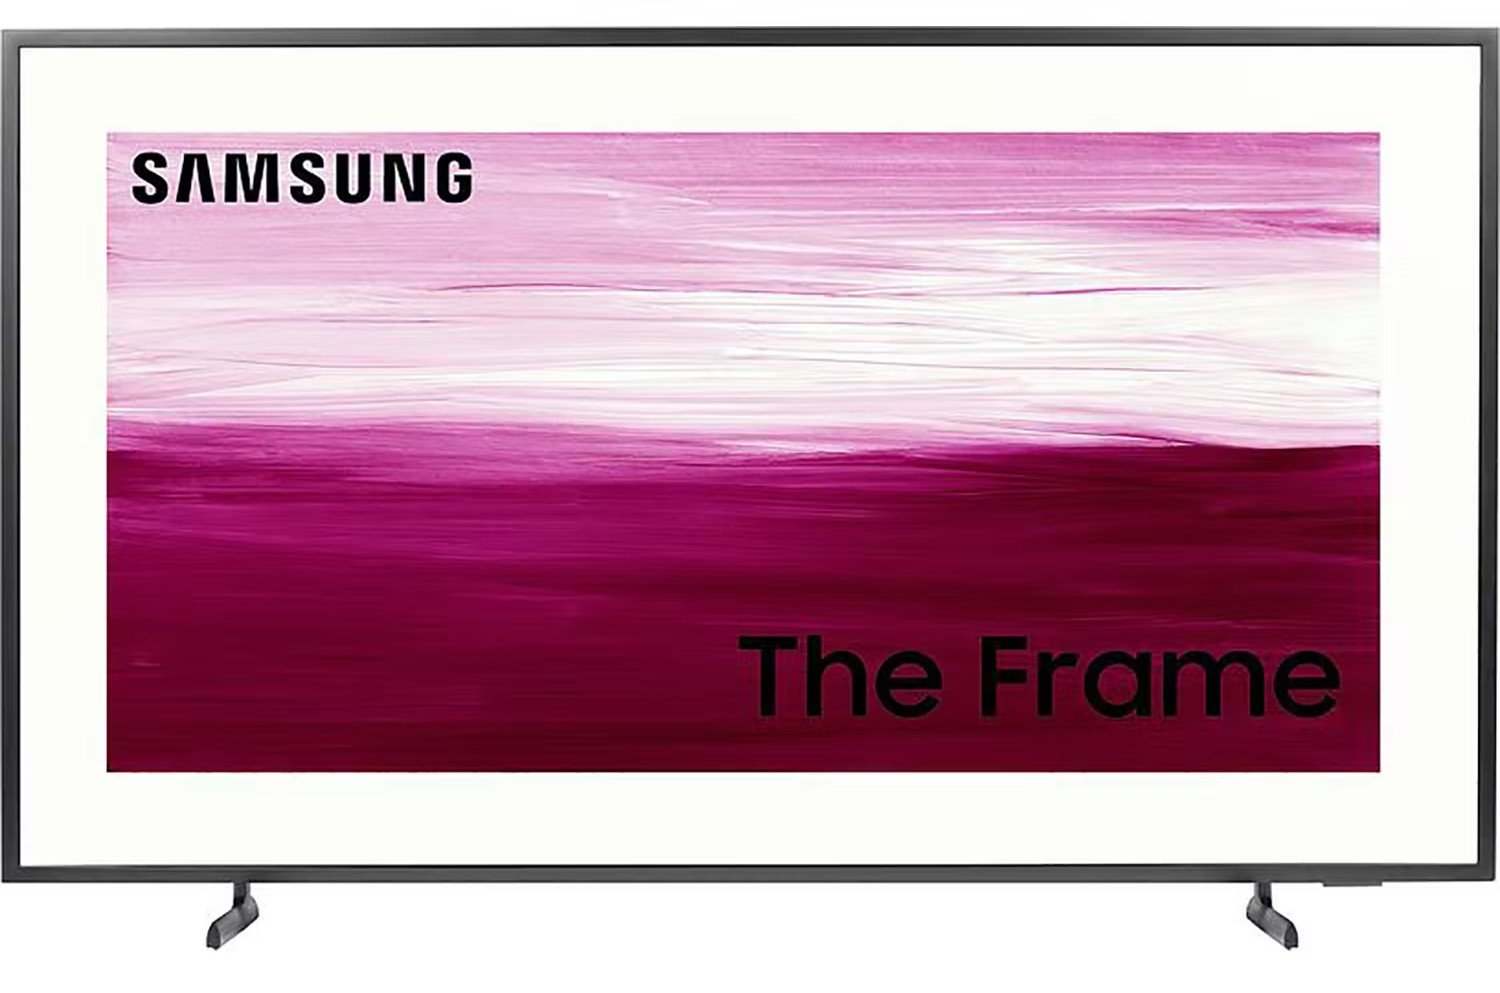 TV vägg inspiration - Samsung The Frame